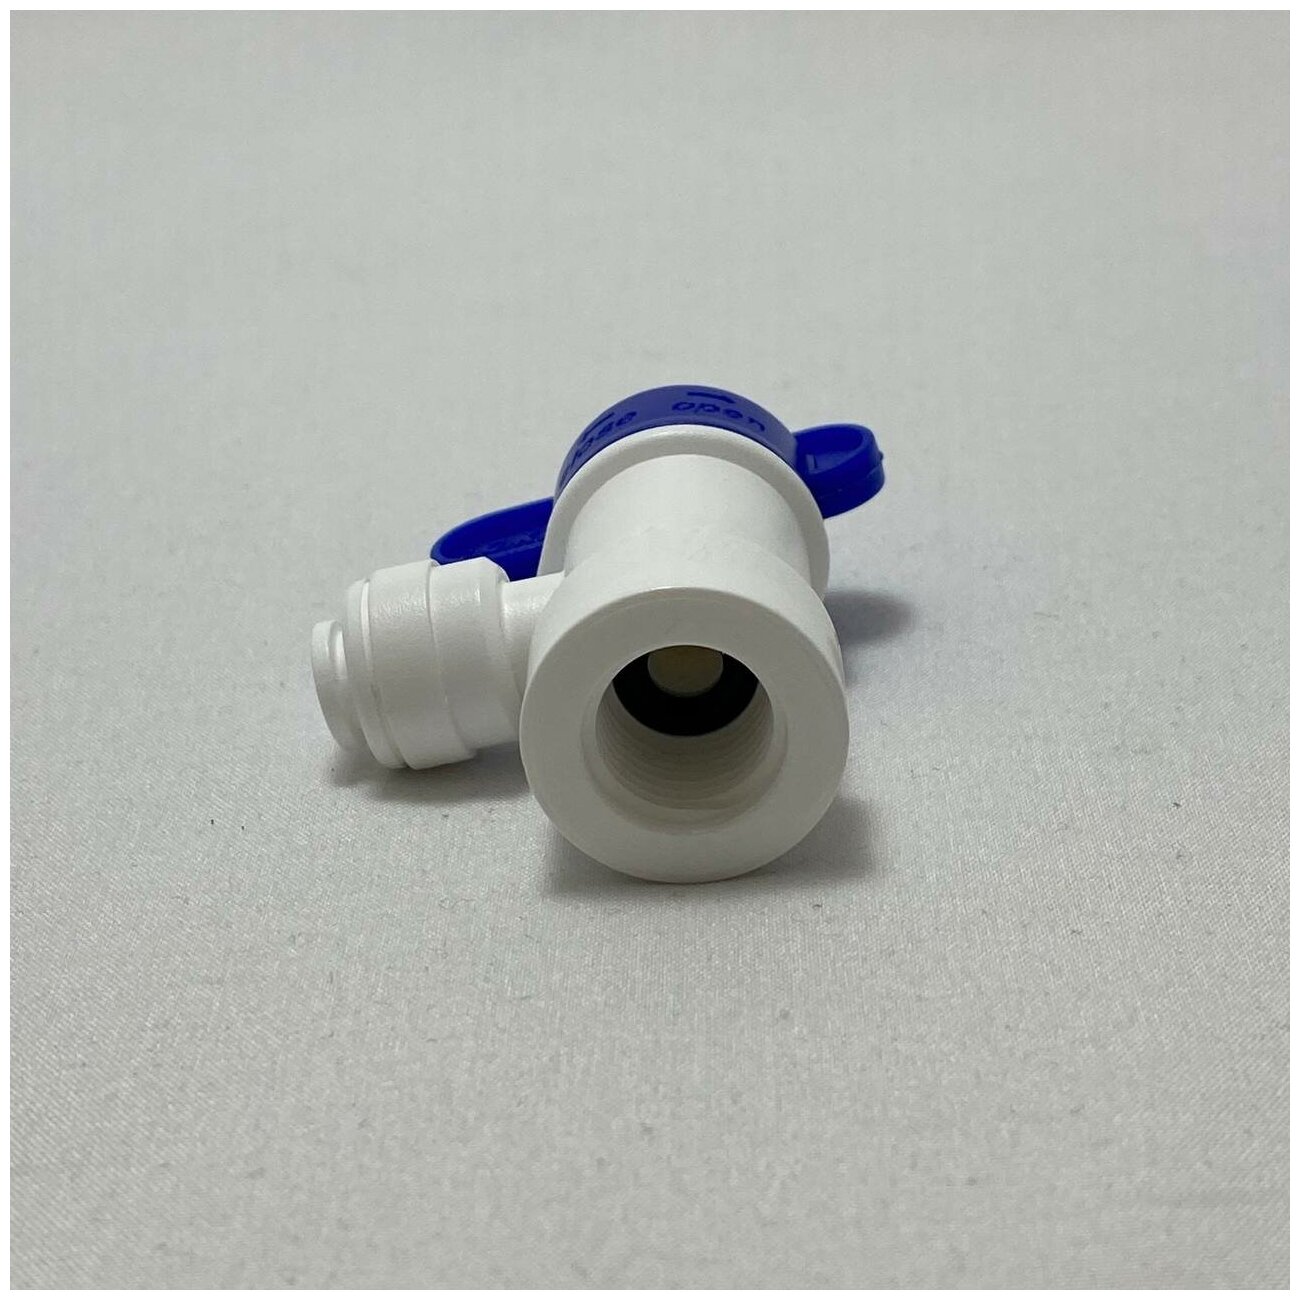 Кран-вентиль для накопительного бака фильтра (1/4" внутренняя резьба - 1/4" трубка) из усиленного пластика C.C.K.